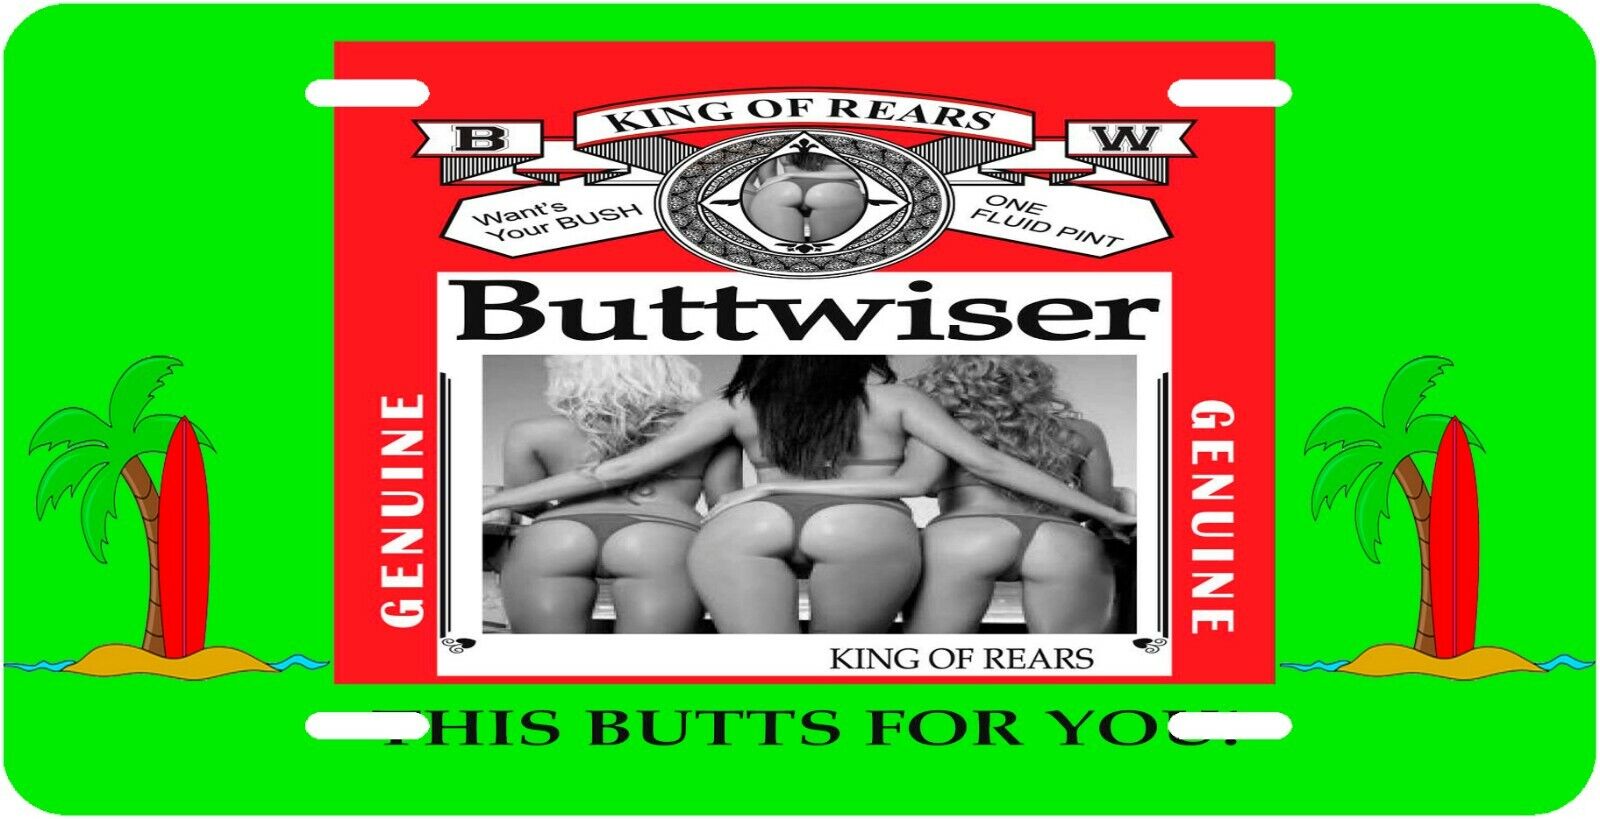 buttwiser bud beer Novelty Vanity High Grade License Plate Frame USA Made (Nice)